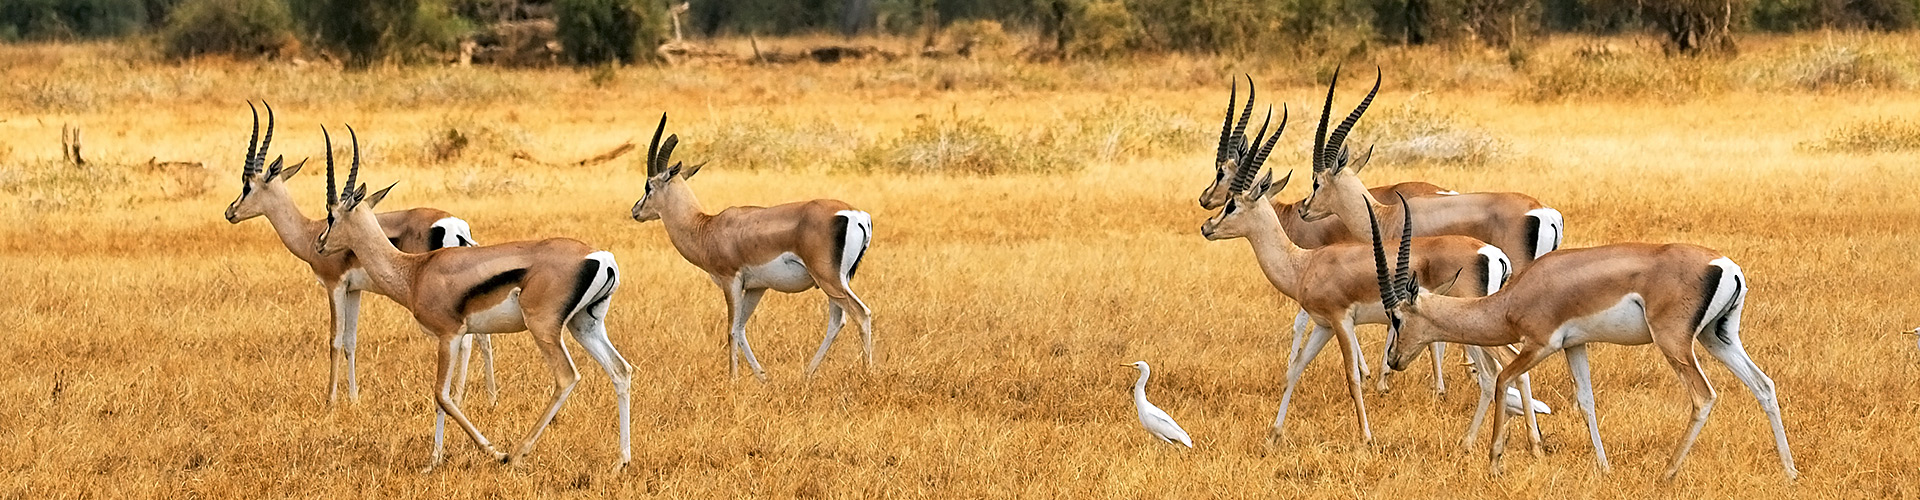 elewana connoisseur safari-iti